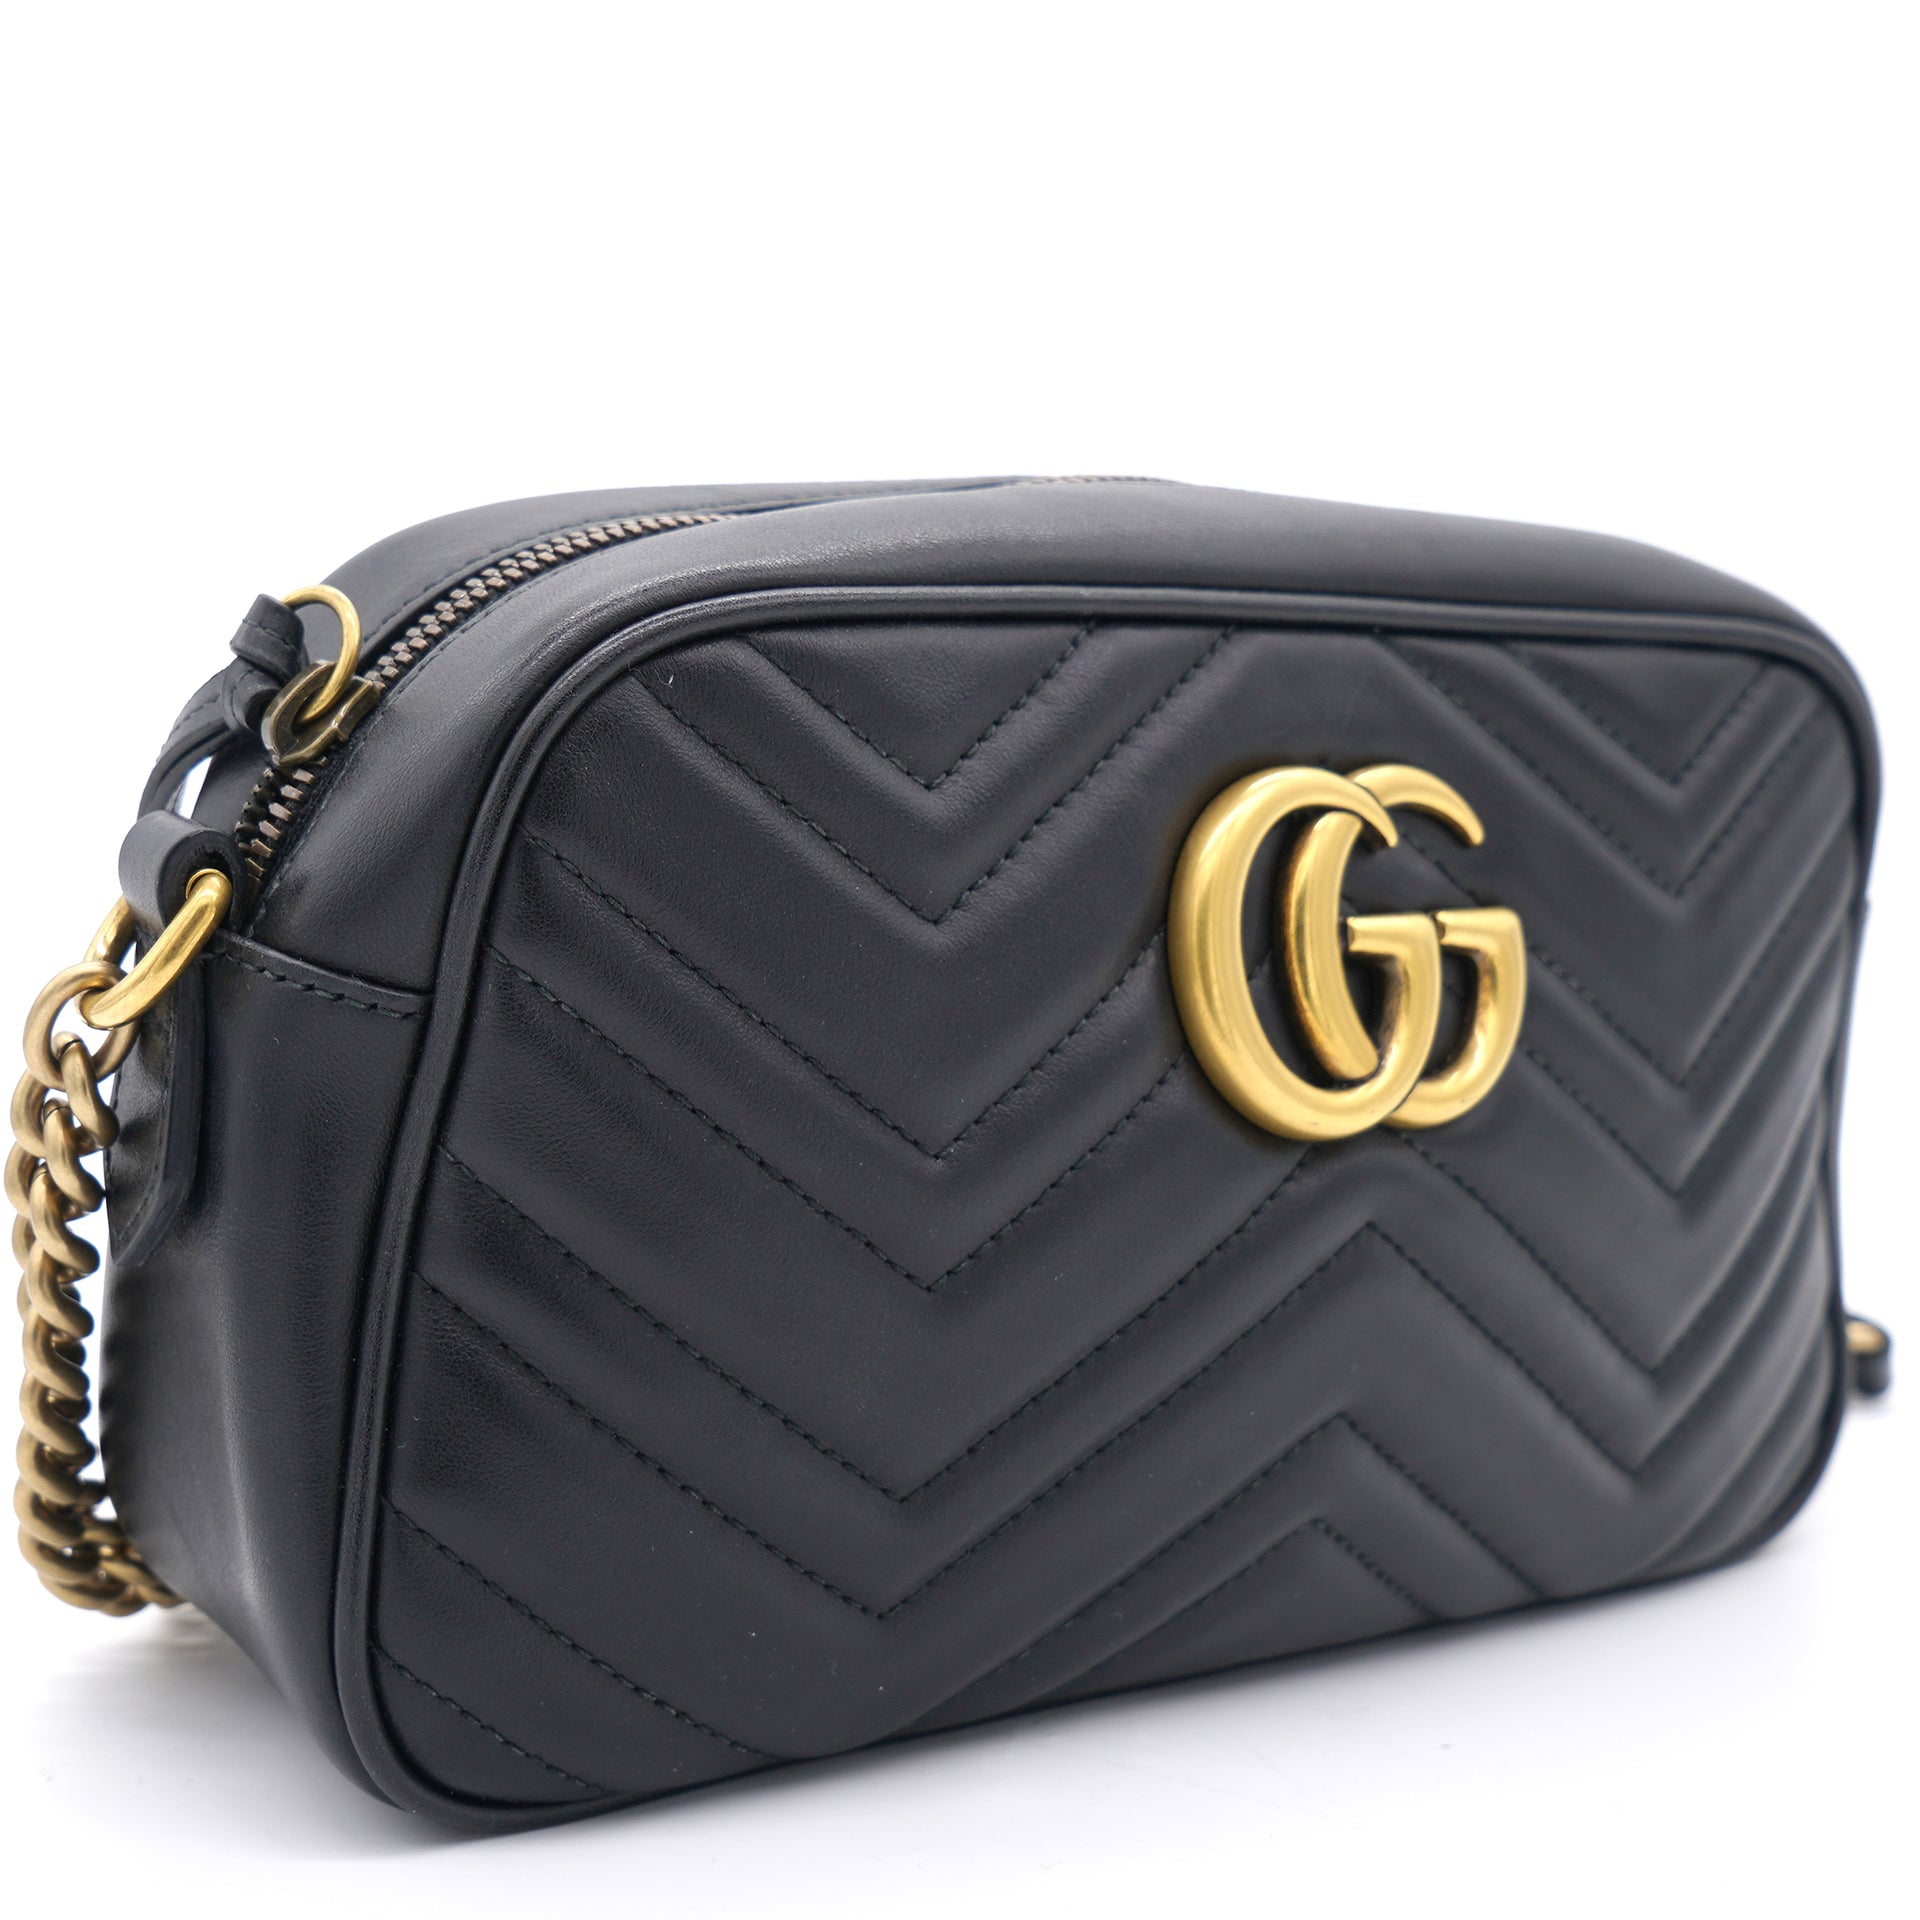 Gucci Marmont GG Mini Black Leather Crossbody Shoulder Bag Handbag Purse -  $900 (43% Off Retail) - From Ivan